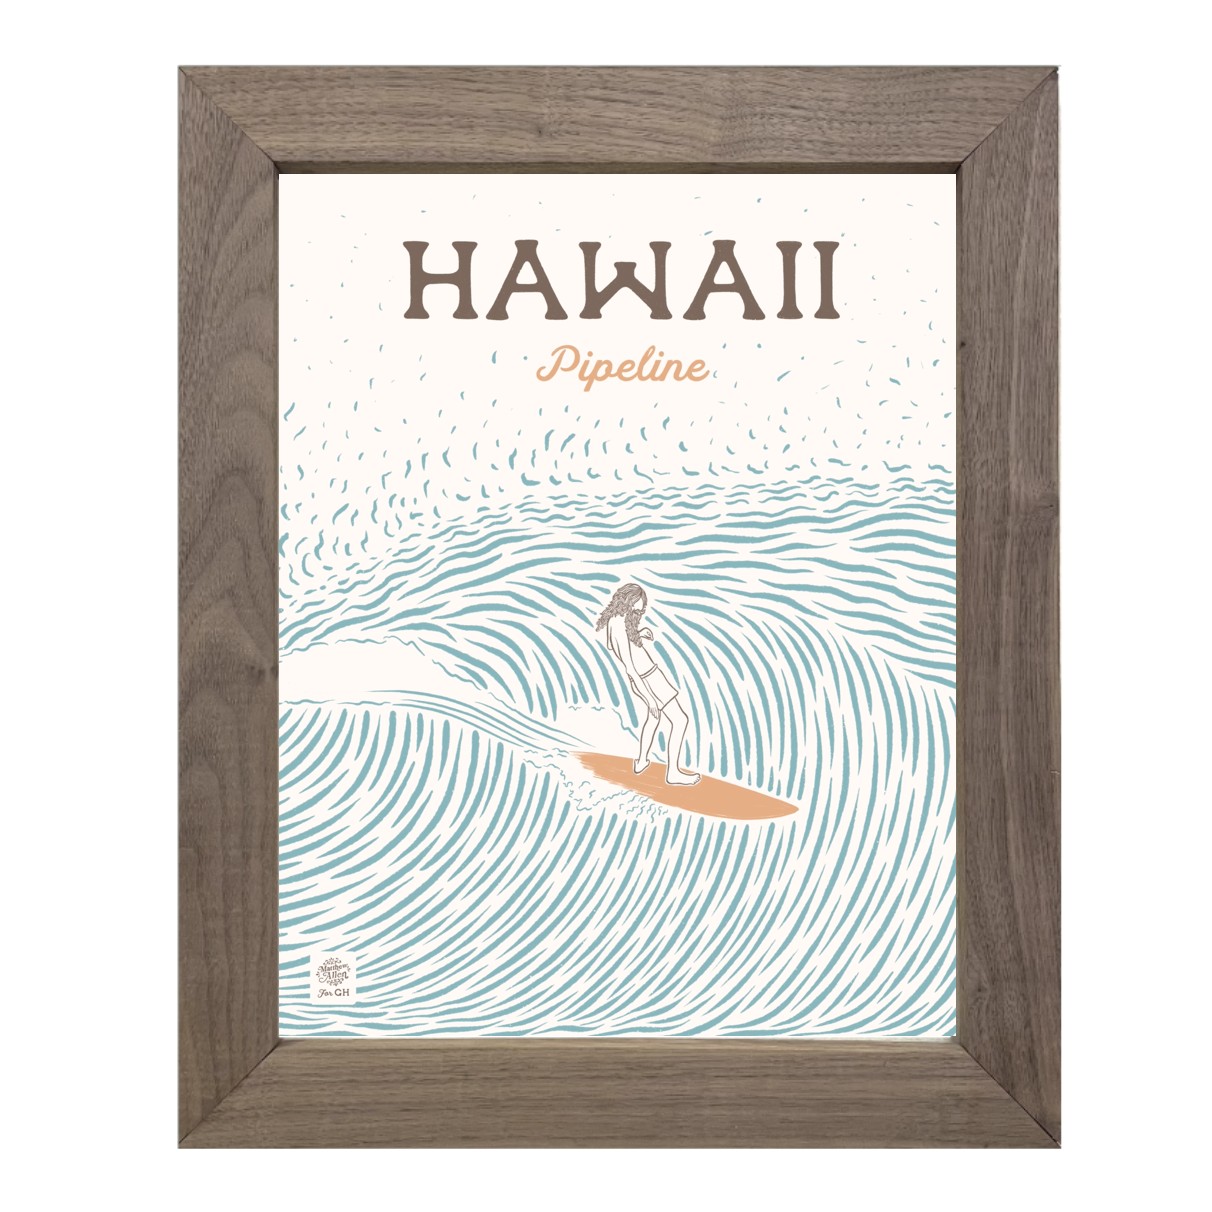 HAWAII  Pipeline by Matthew Allen